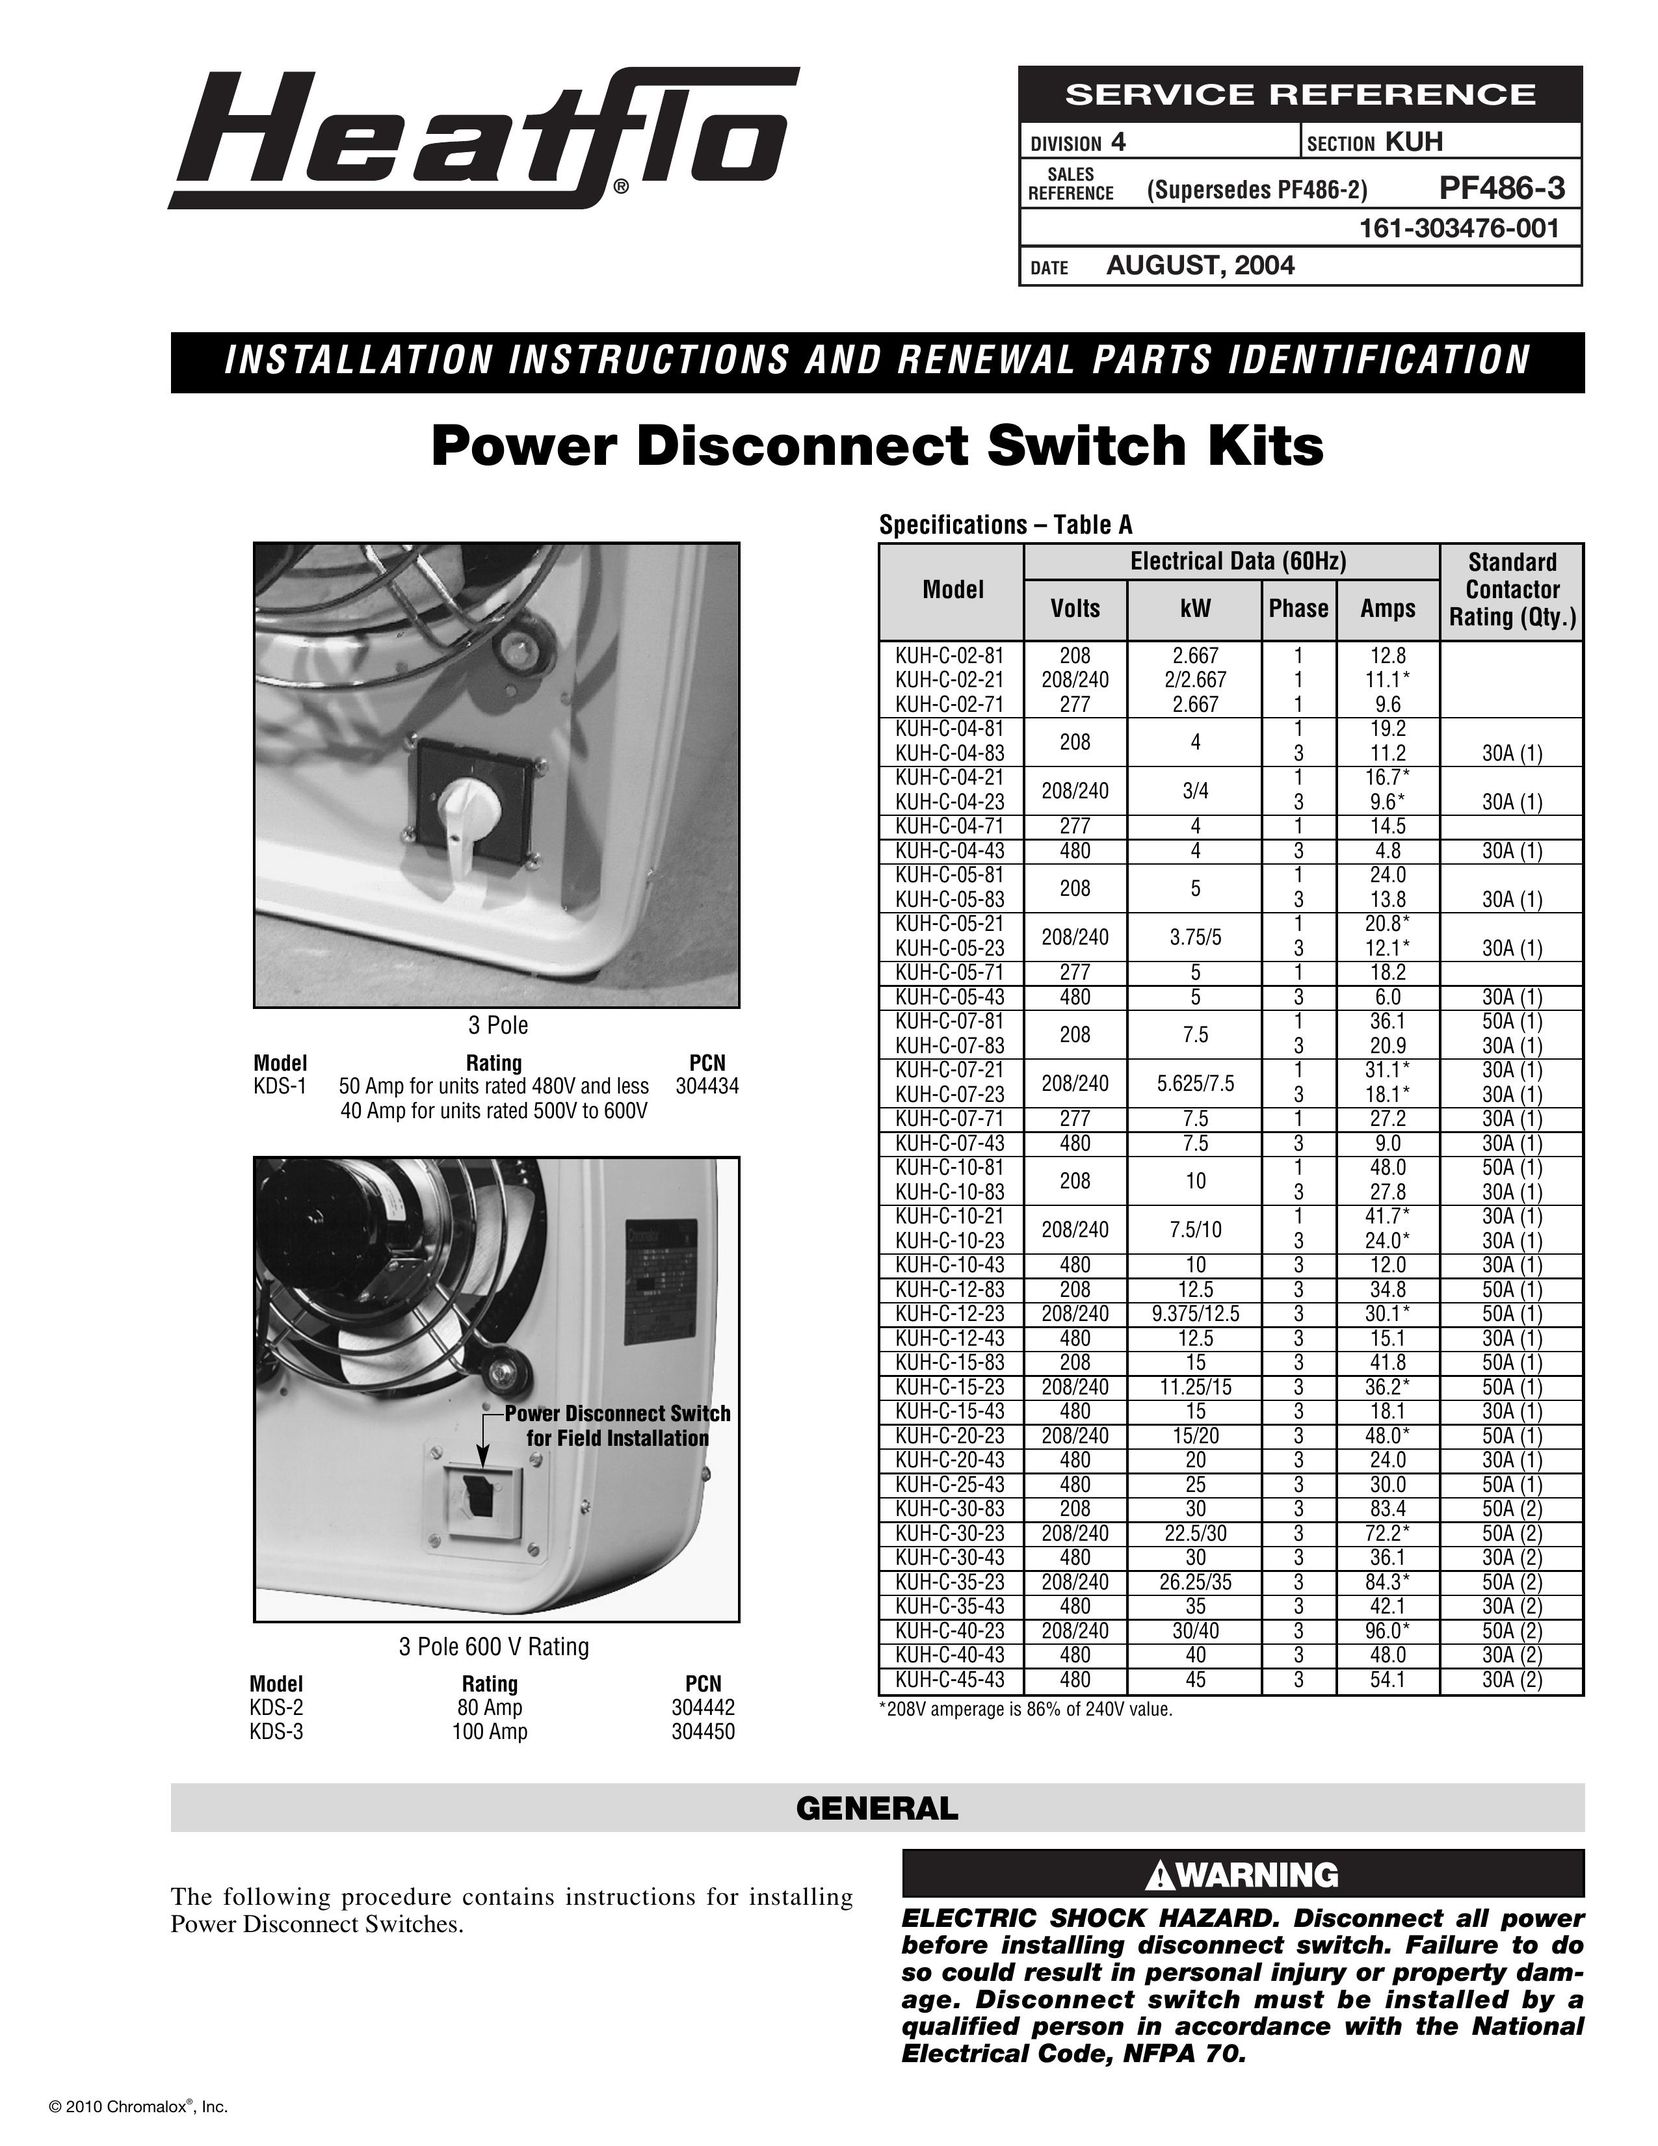 Chromalox KDS-3 Switch User Manual